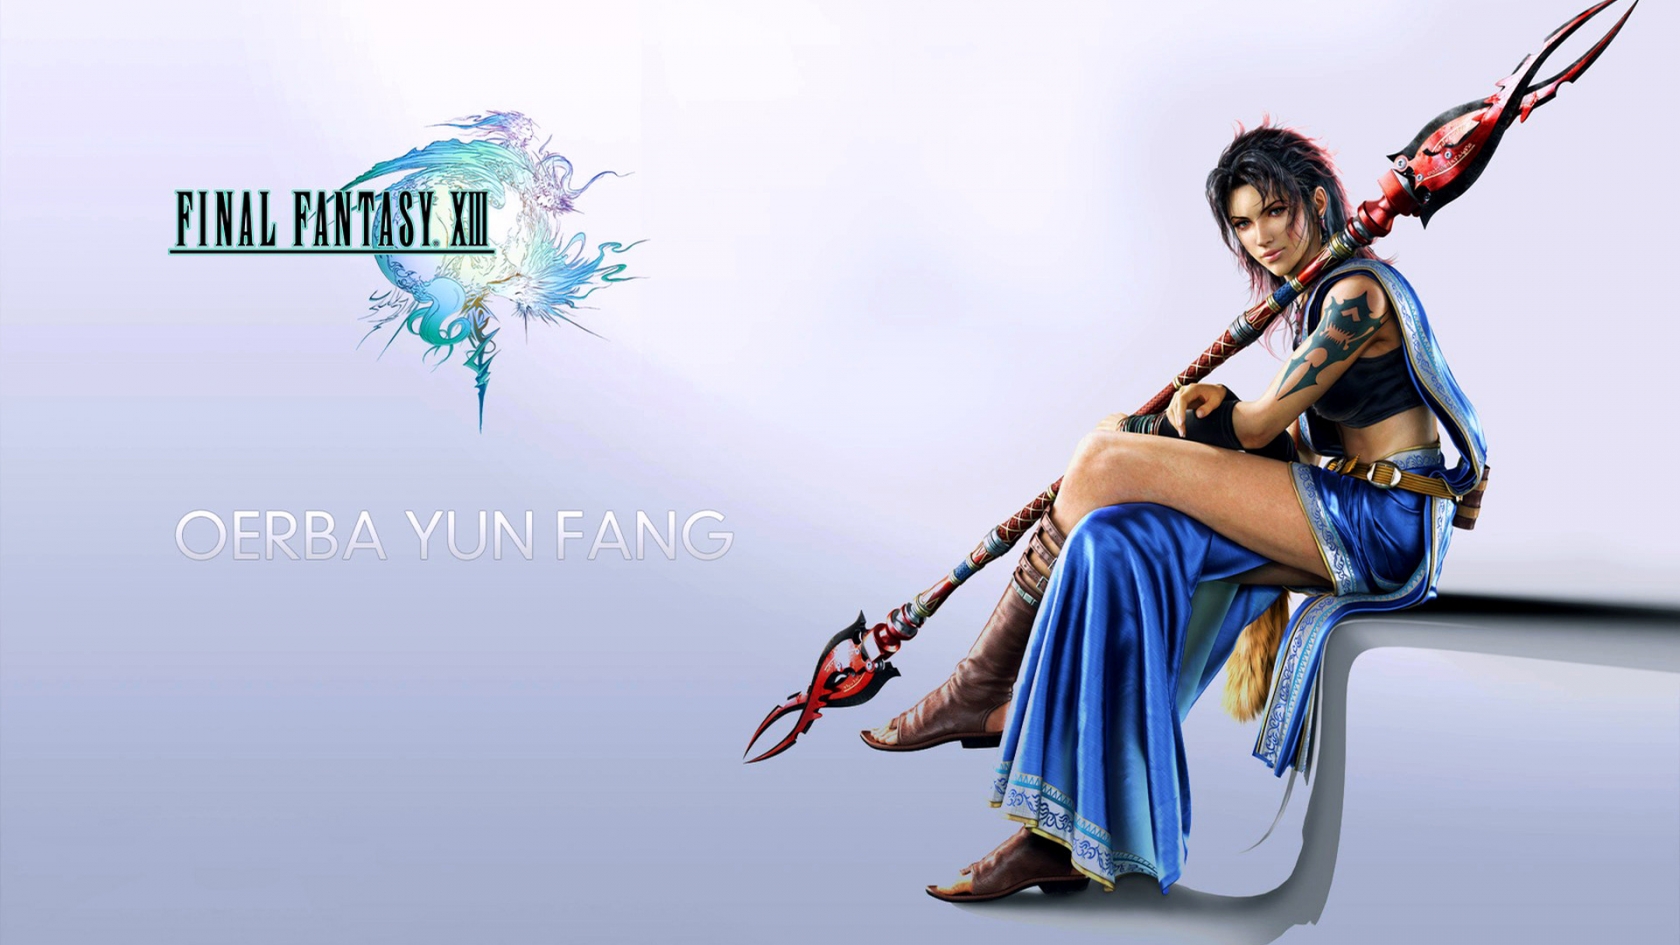 Final Fantasy XIII Oerba Yun Fang for 1680 x 945 HDTV resolution